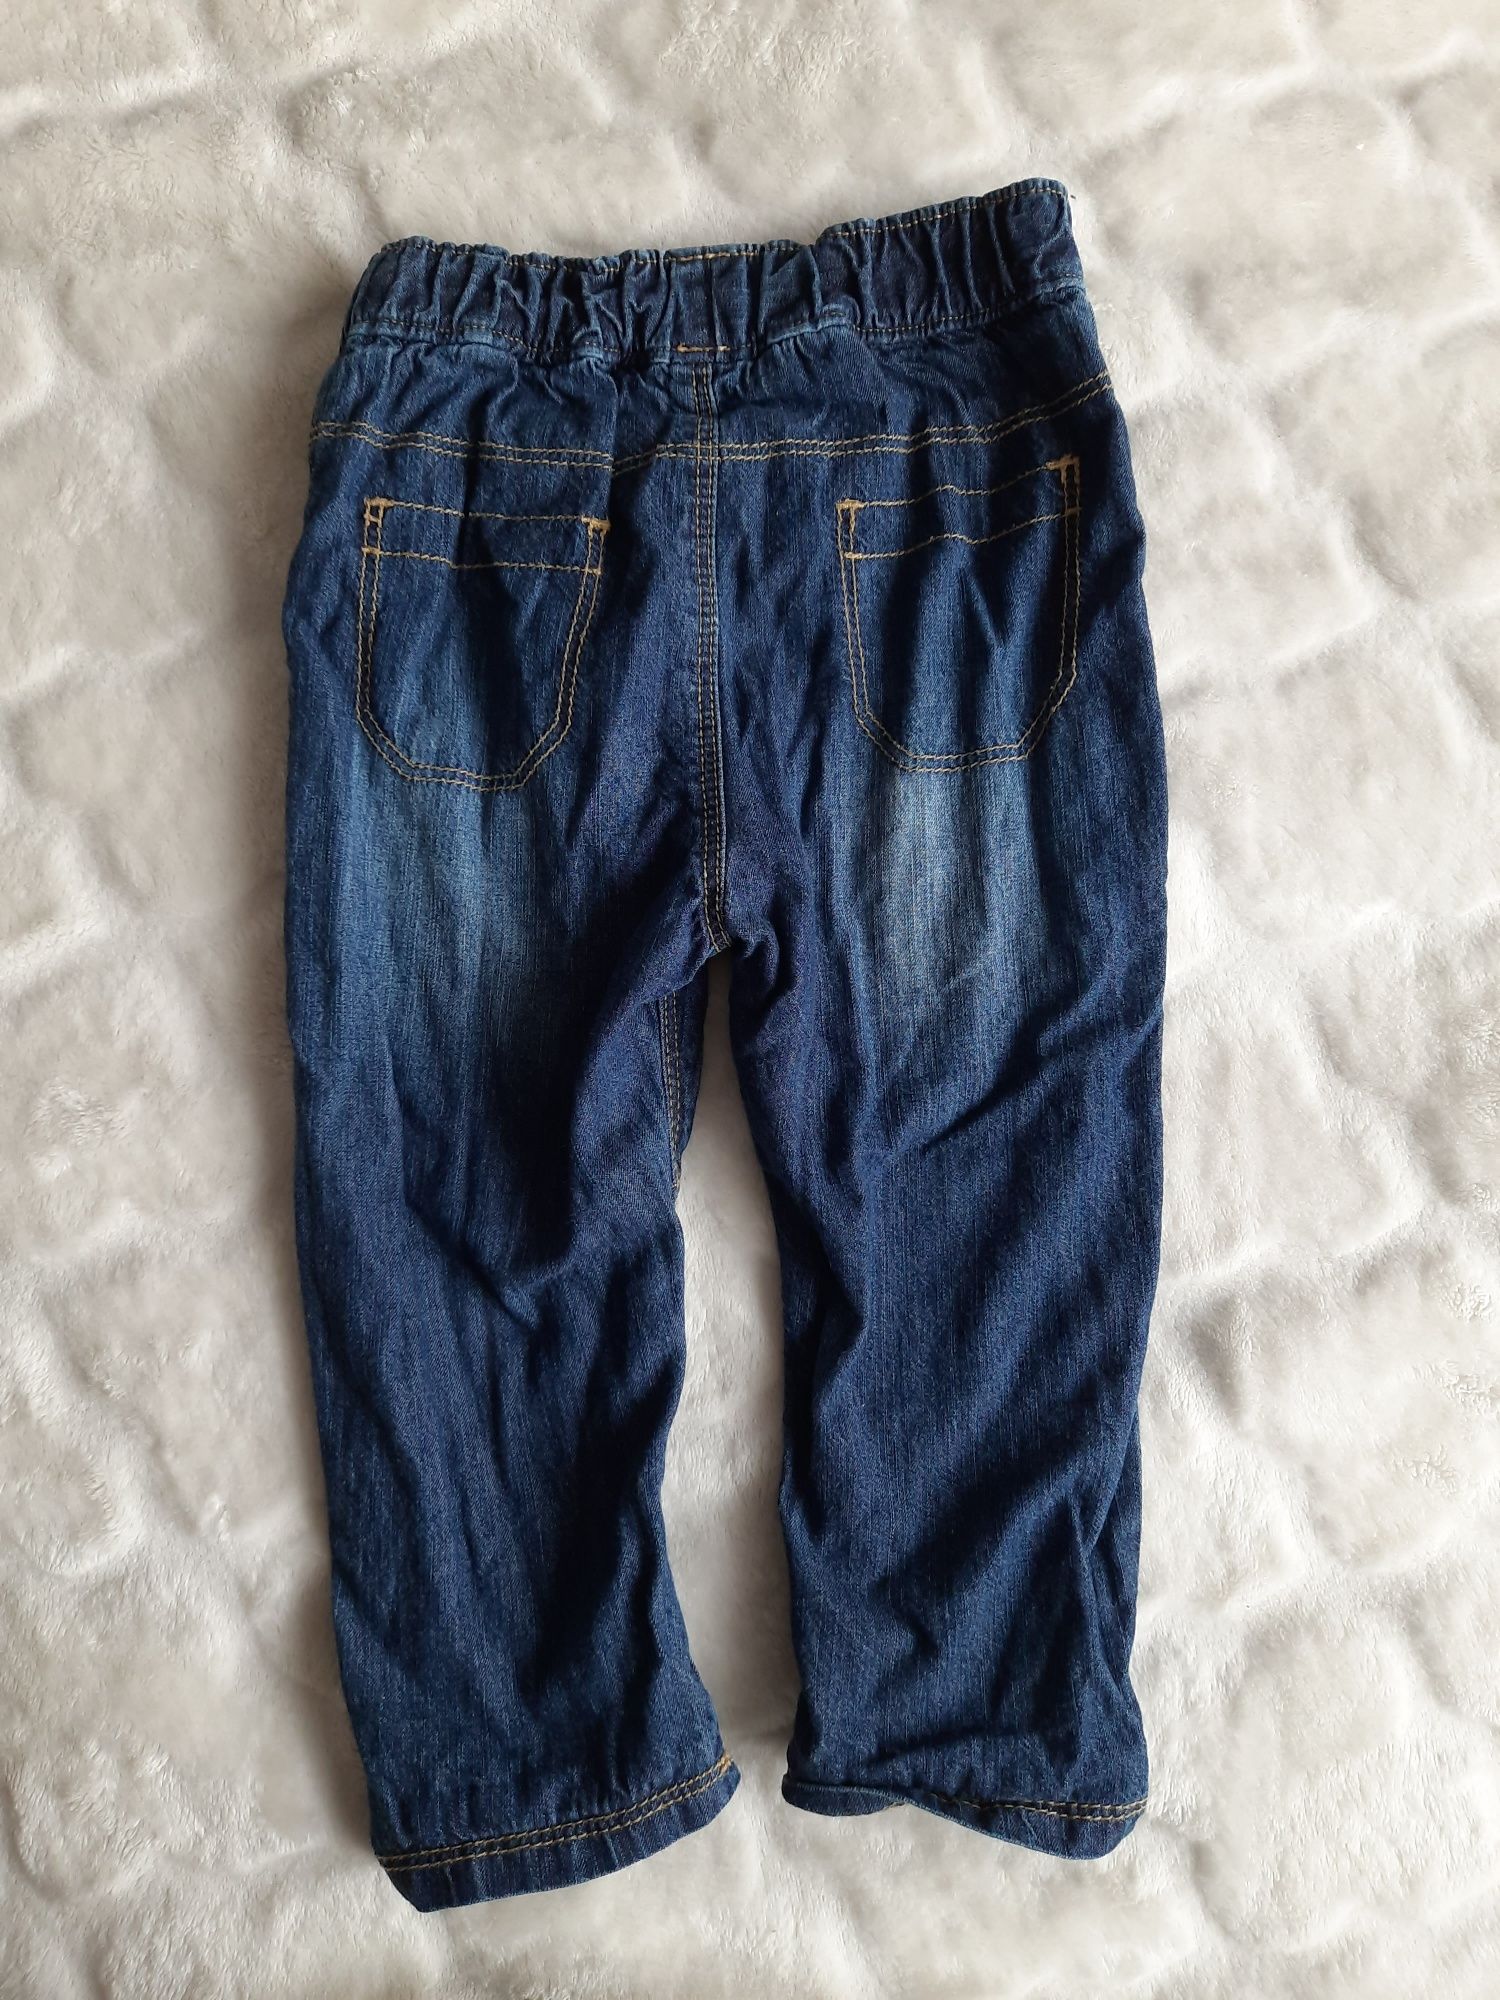 Spodnie ocieplane 80/86 jeansy